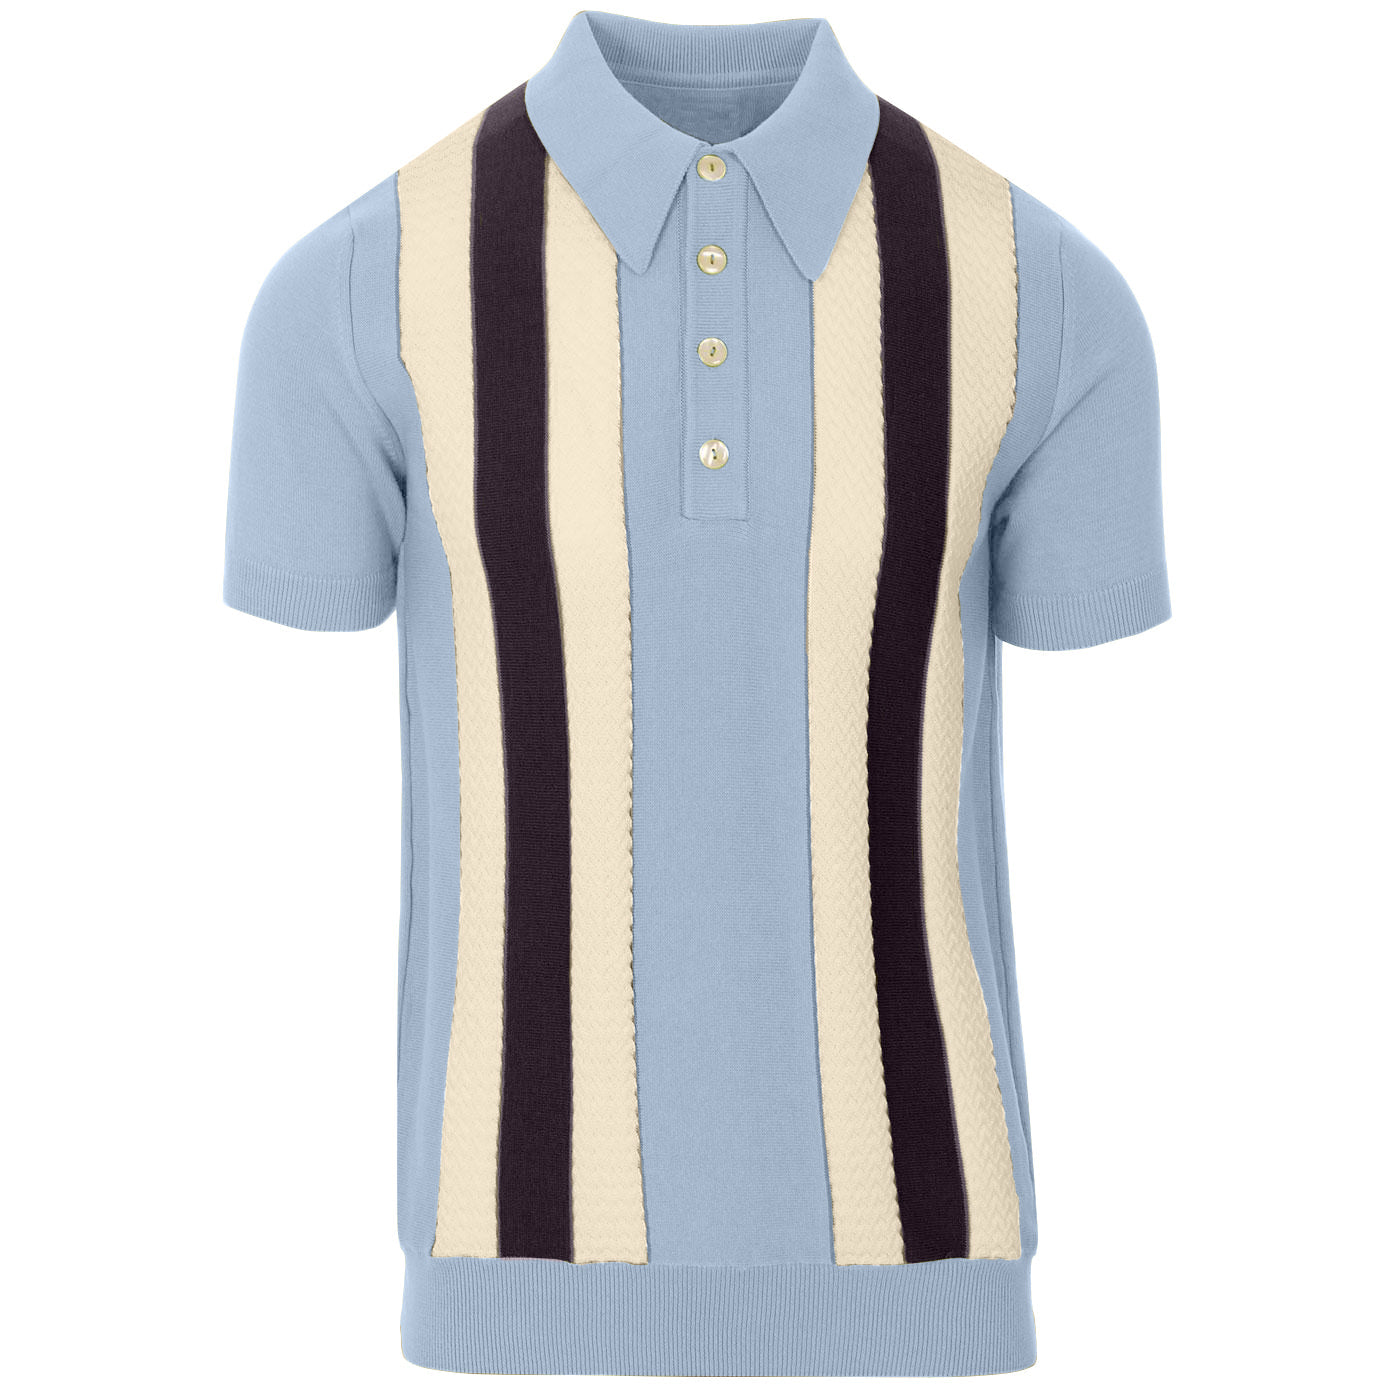 OXKNIT Clothing Mod Retro Knit Casual Stripe Polo 1960s Blue – Men OXKnit Style Vintage